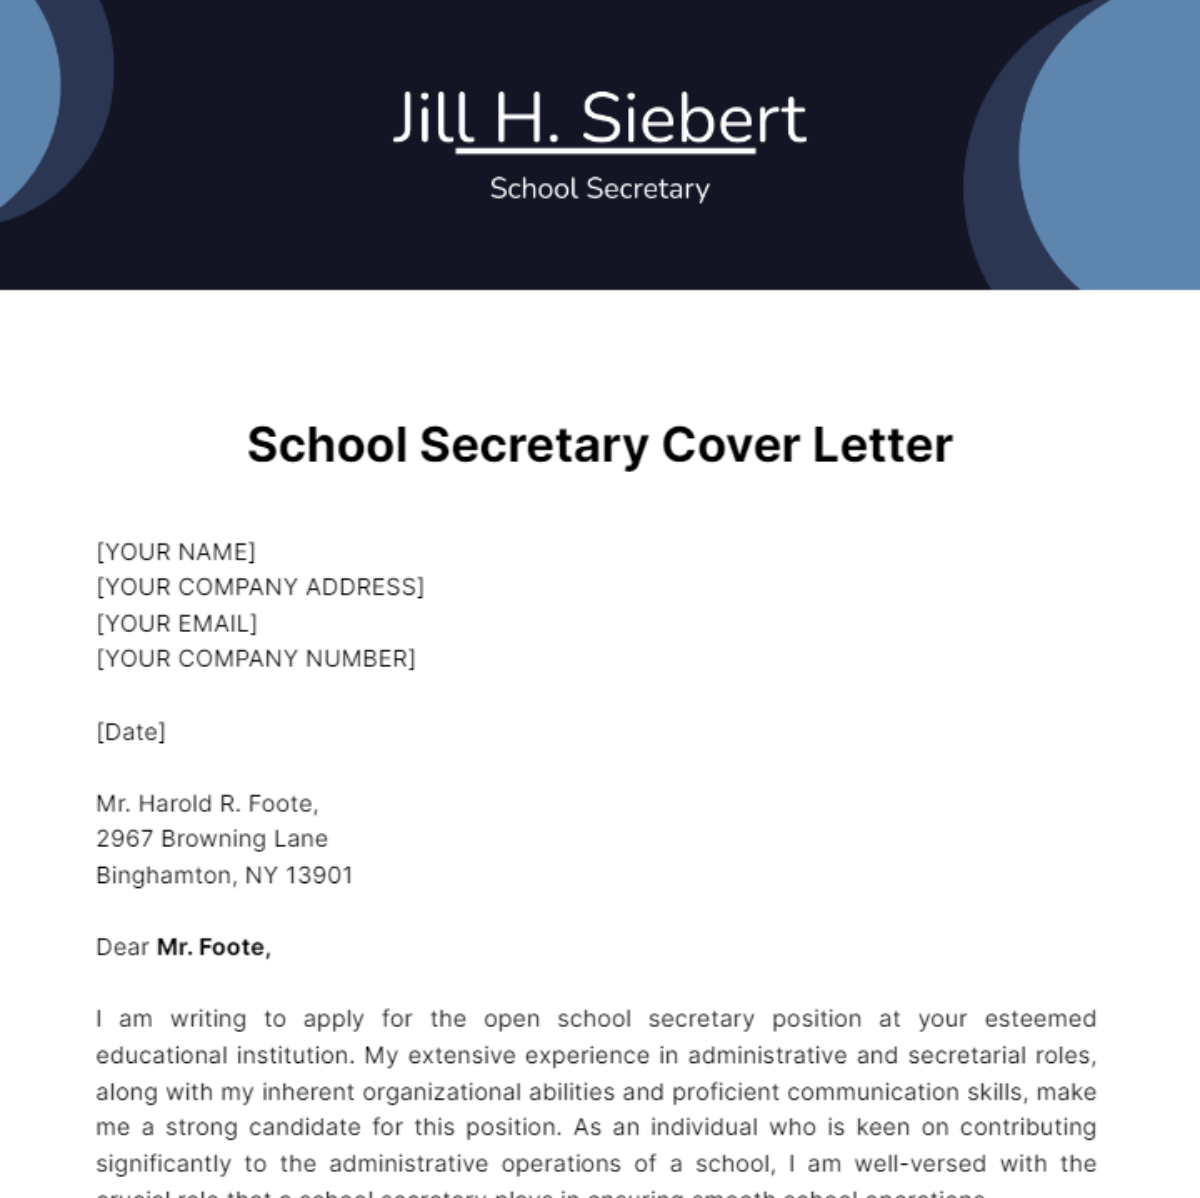 School Secretary Cover Letter Template